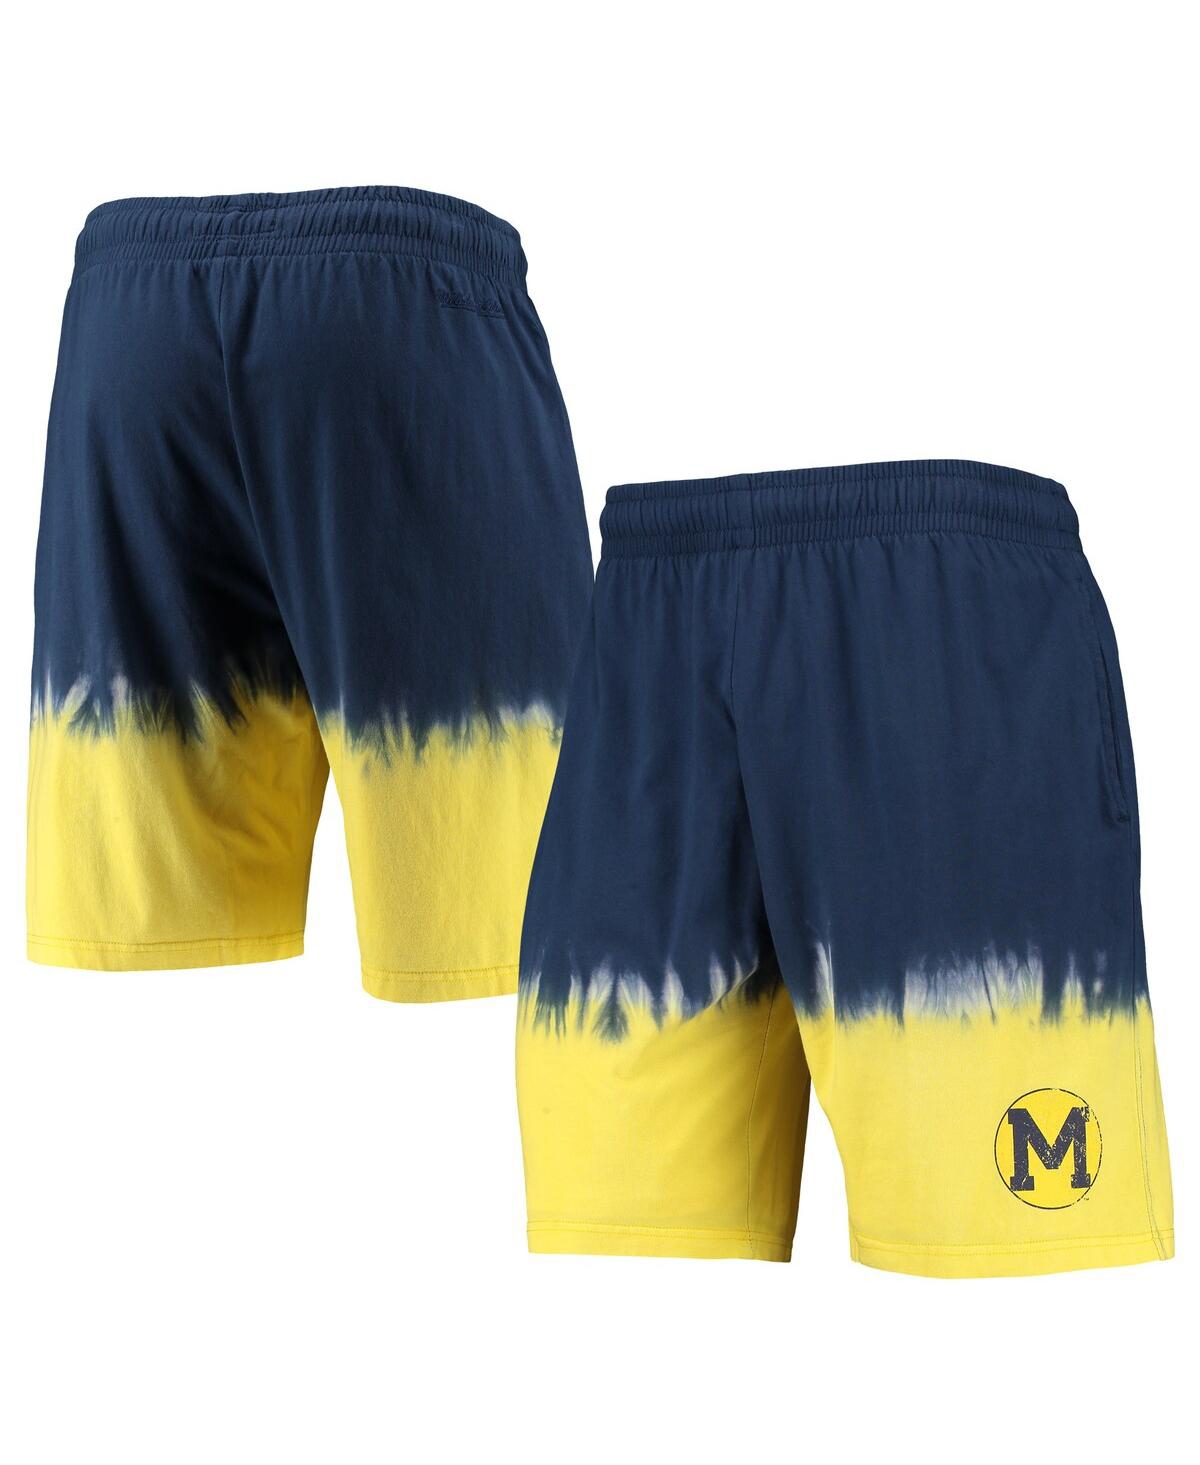 Men's Mitchell & Ness Navy, Gold Michigan Wolverines Tie-Dye Shorts - Navy, Gold